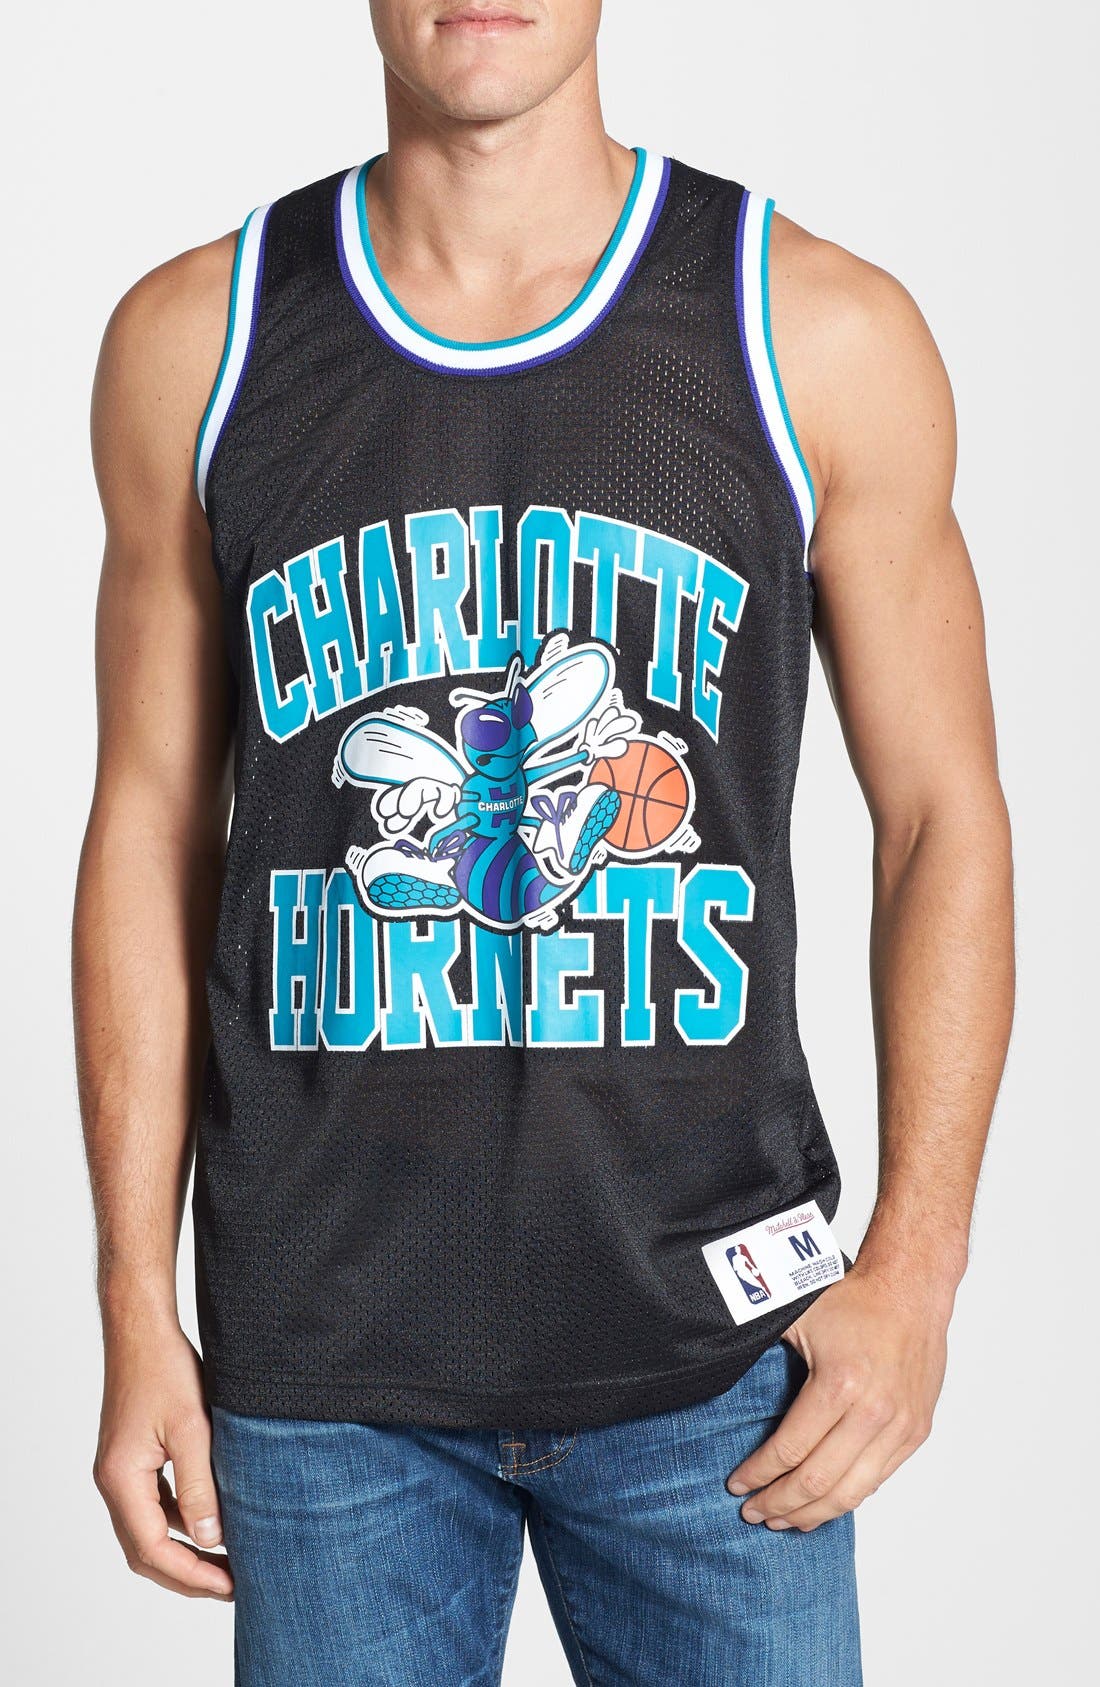 Charlotte Hornets' Mesh Tank Top Jersey 